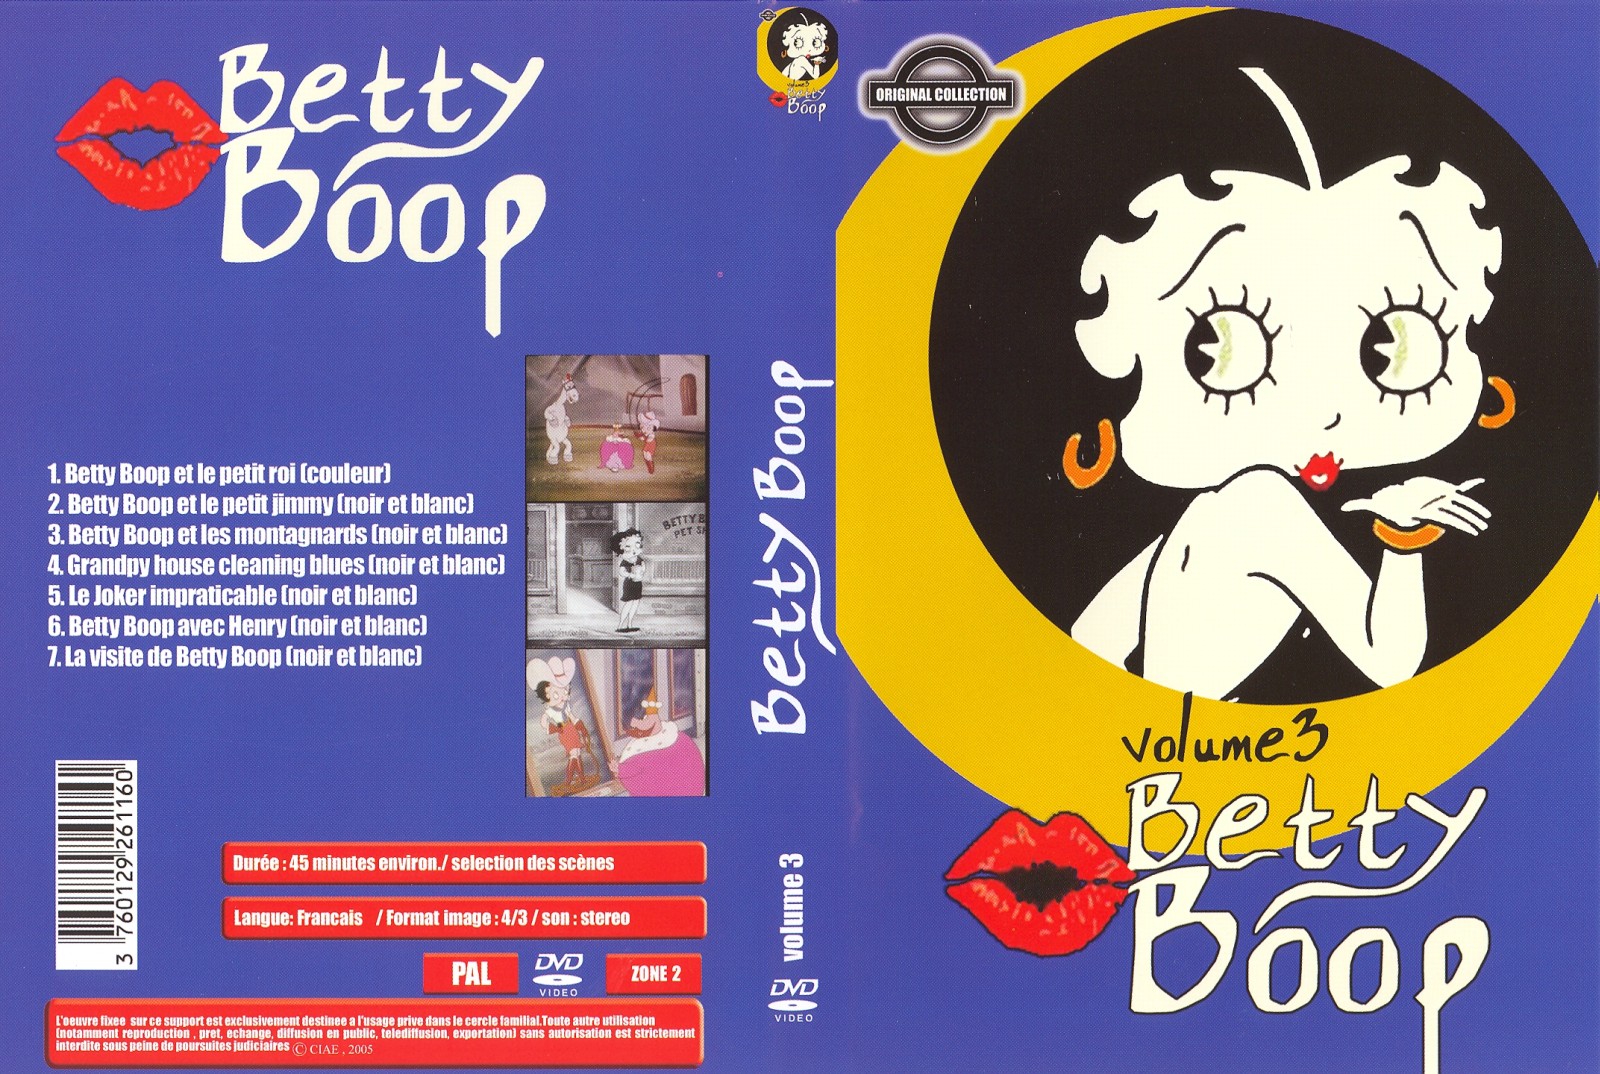 Jaquette DVD Betty Boop vol 3